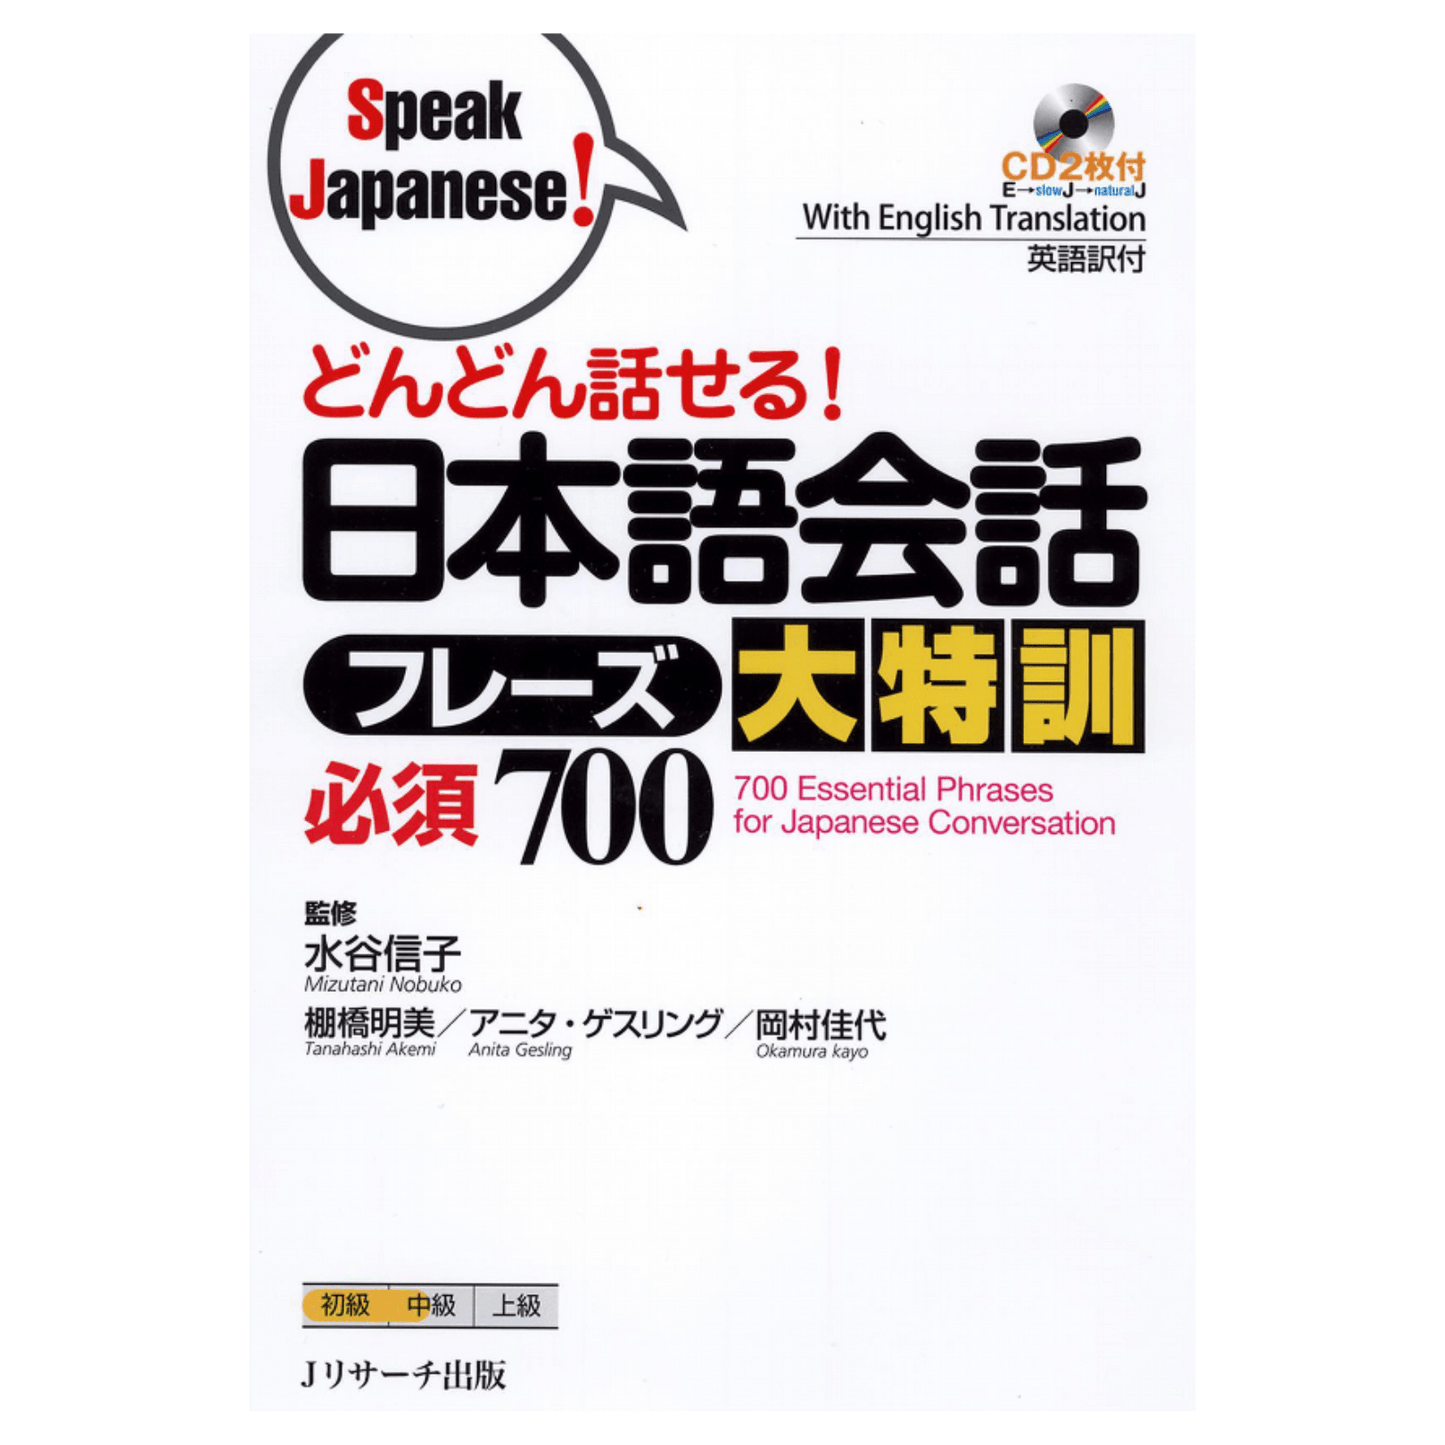 Manuel de Japonais | Speak Japanese! - どんどん話せる! ChitoroShop